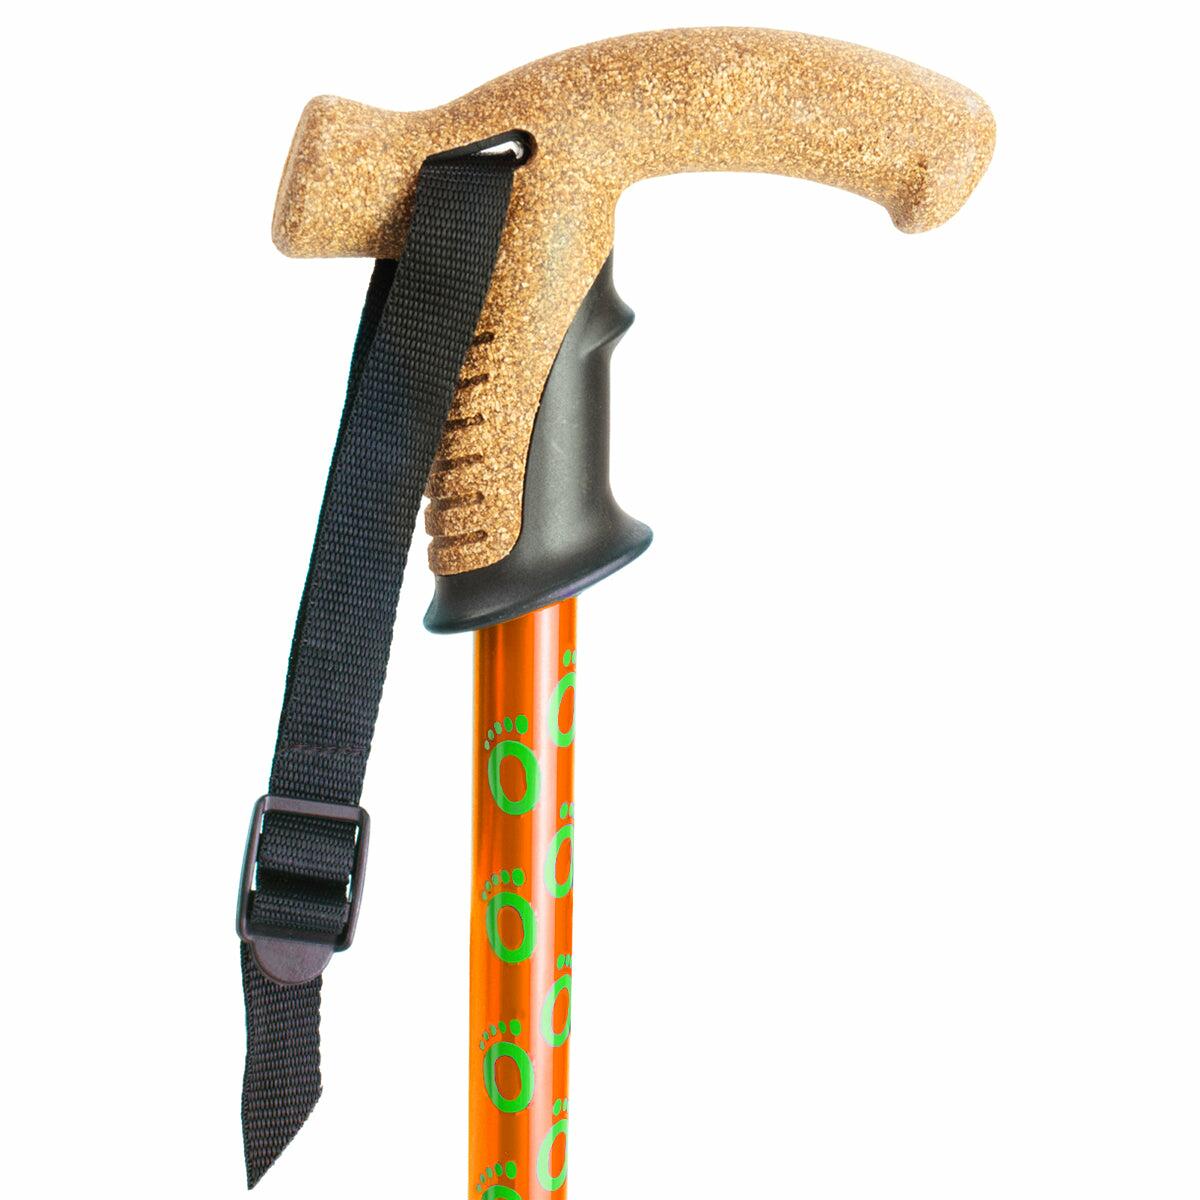 The cork handle of an orange Flexyfoot Premium Cork Handle Walking Stick